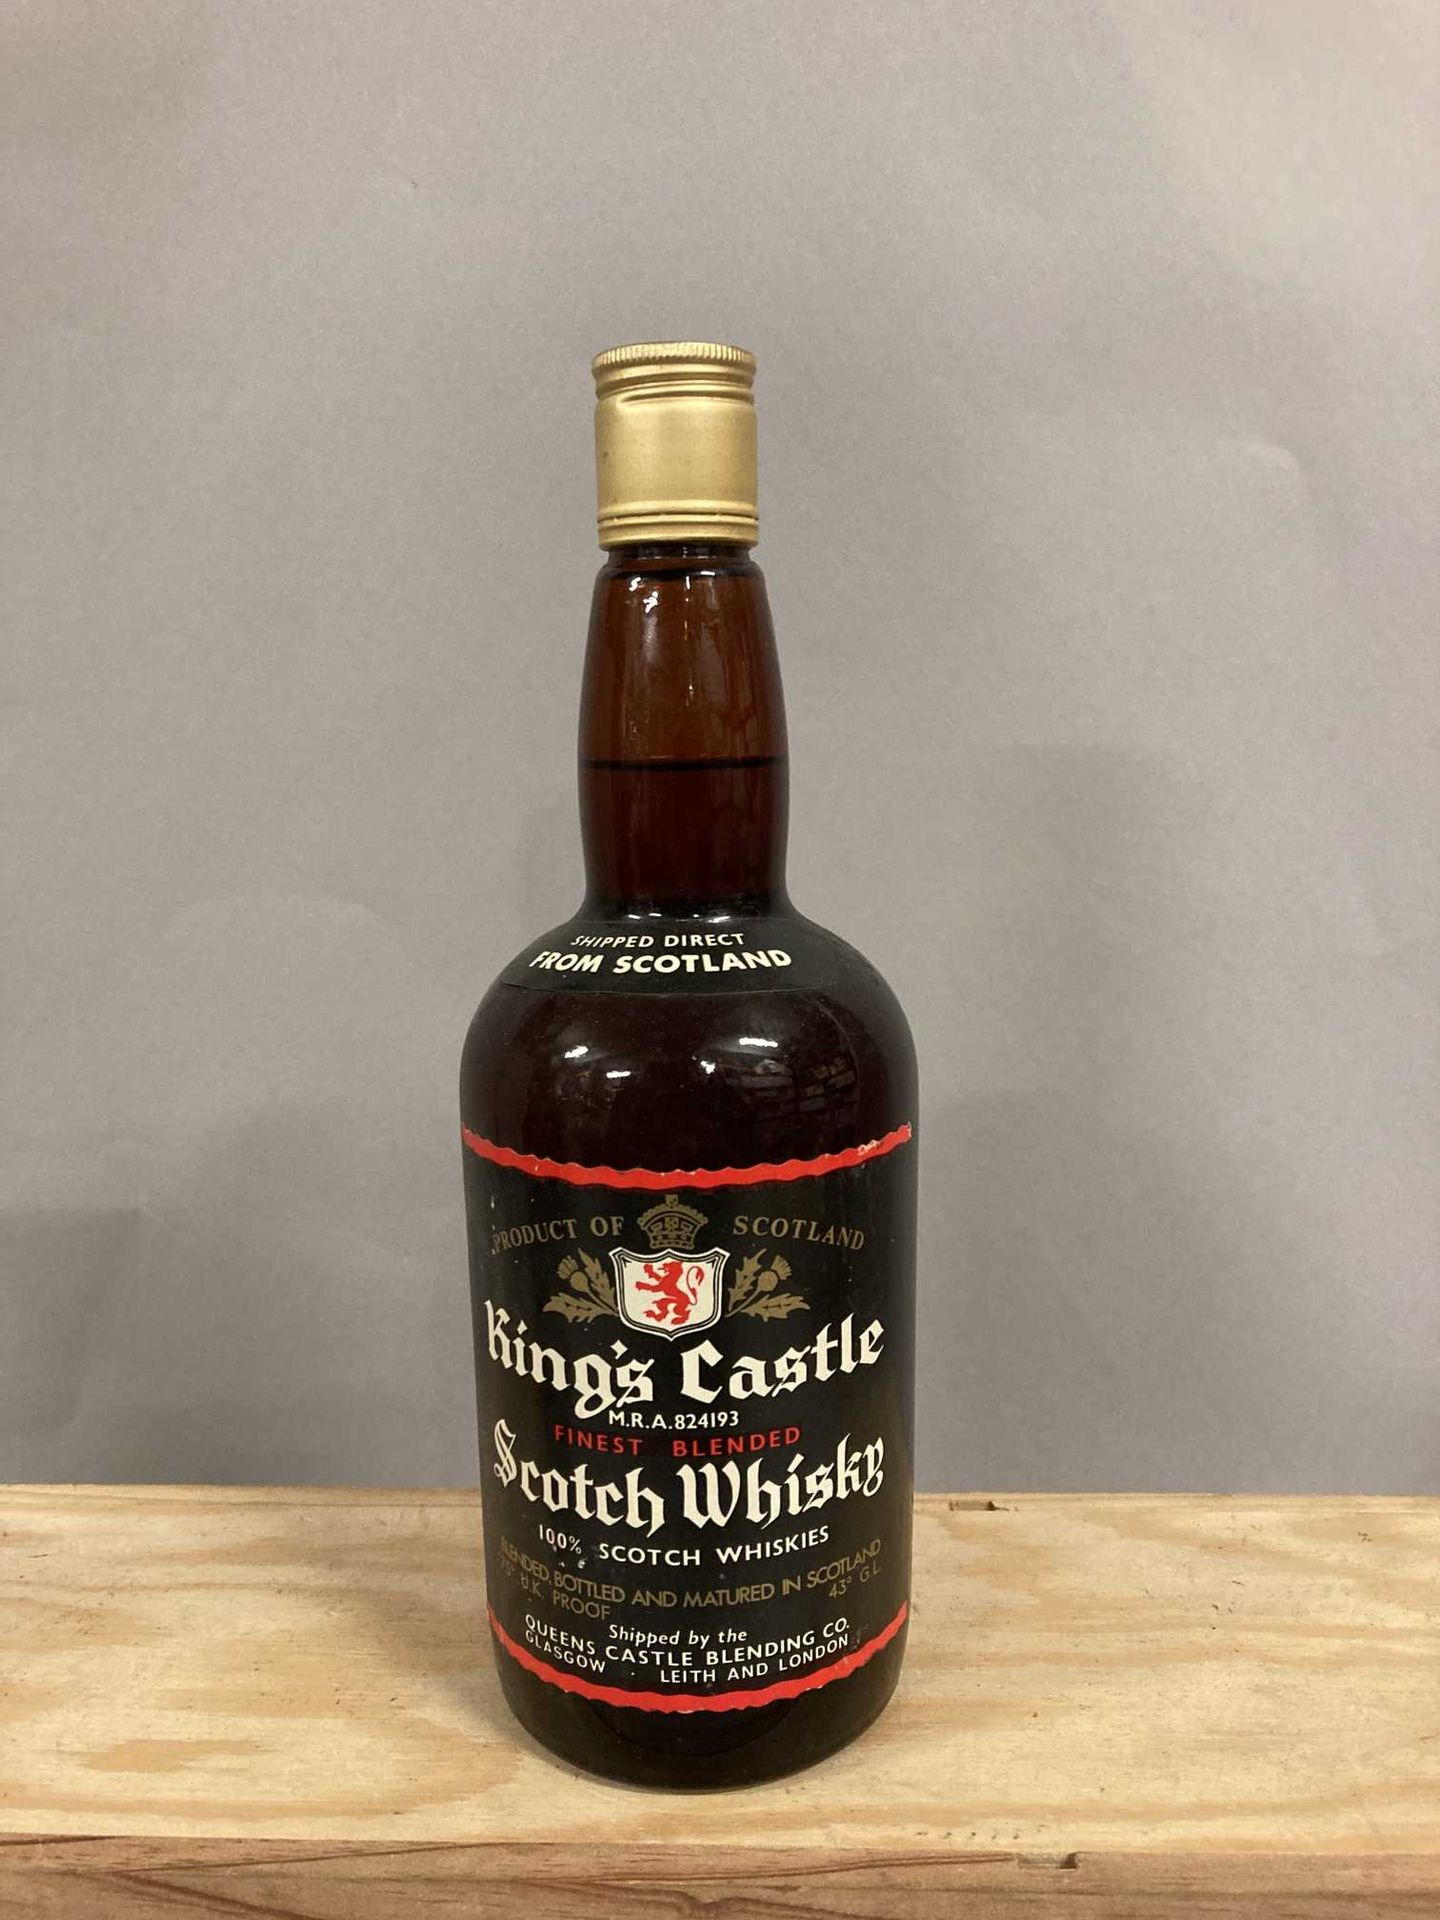 Null 1 bottiglia di SCOTCH WHISKY "King's castle", Queen's castle Blending co.